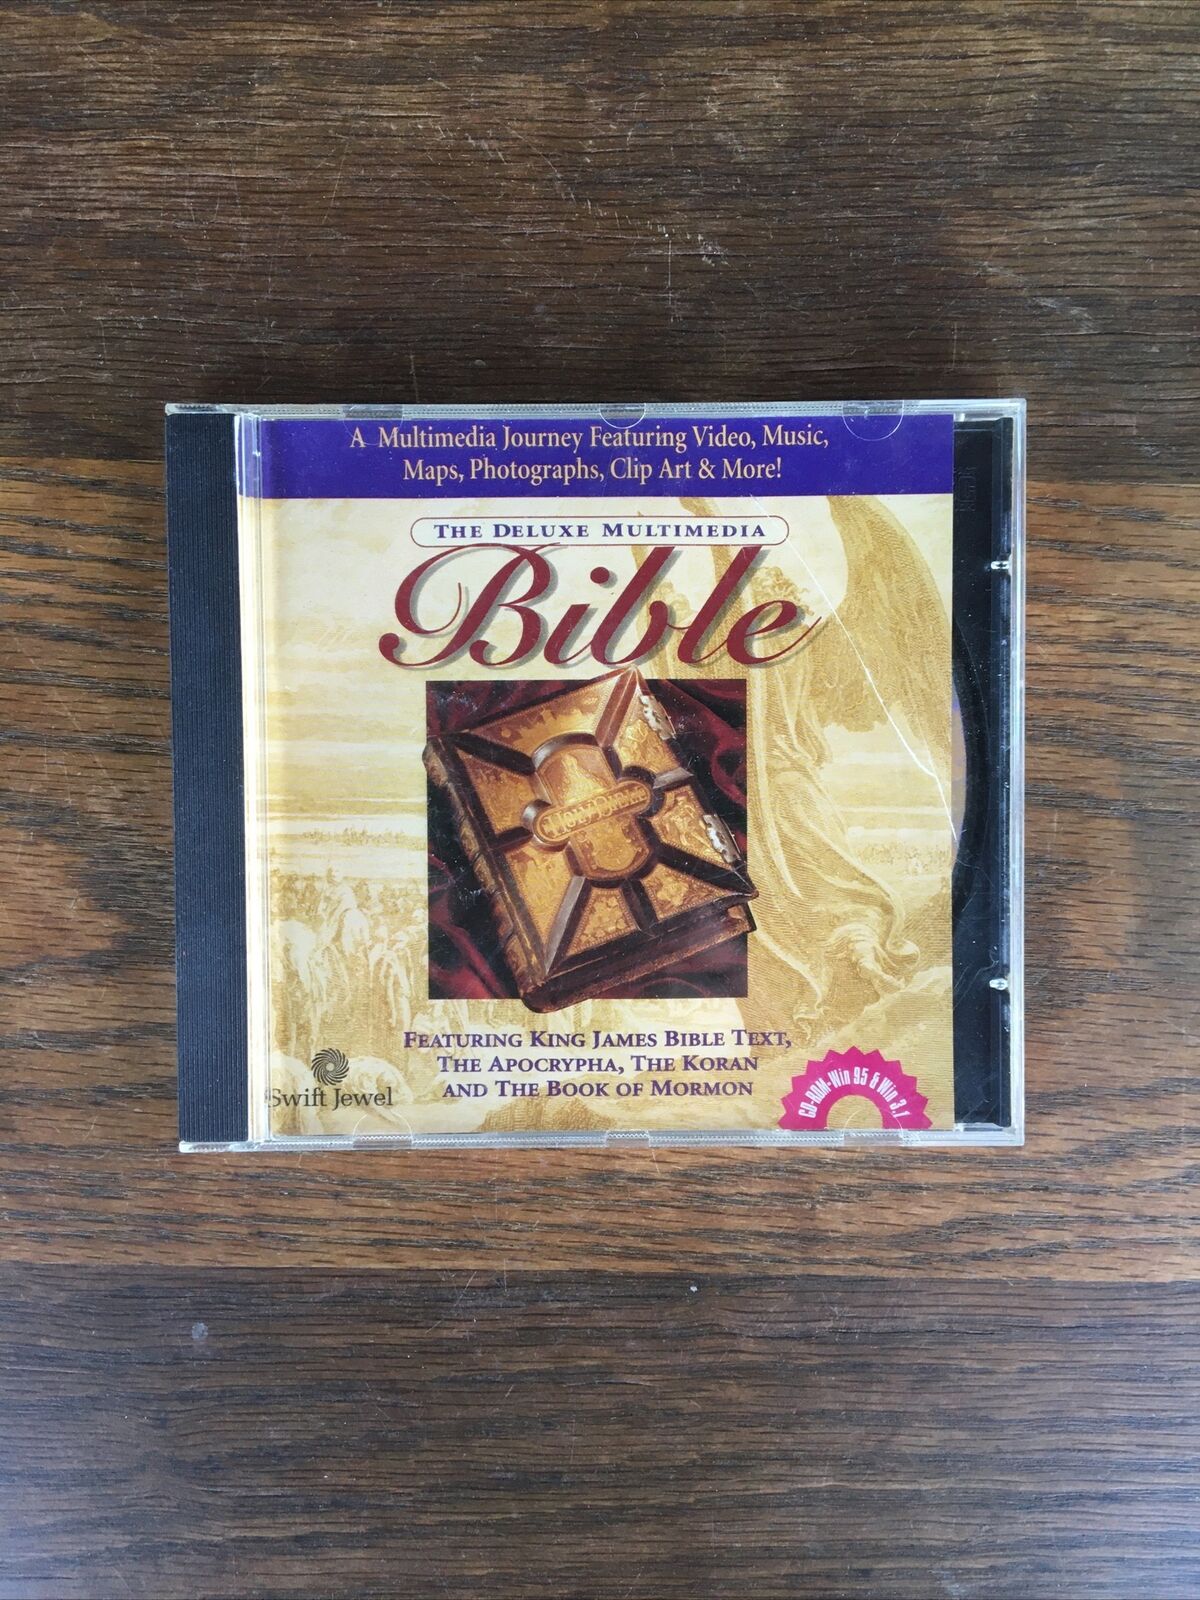 Deluxe Multimedia Bible CD King James Koran More Windows 95 3.1 Clipart Vintage